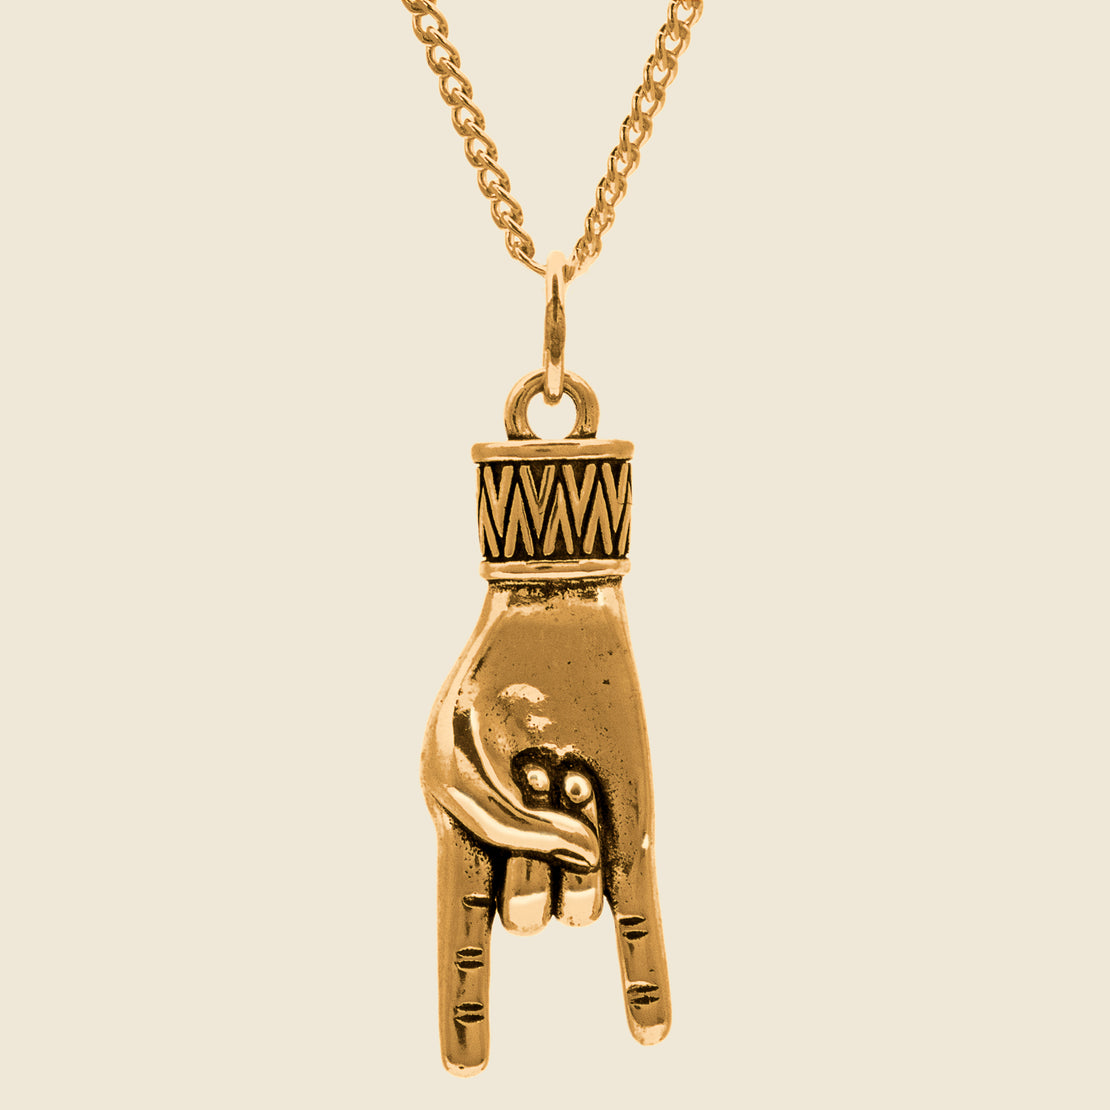 LHN Jewelry Hand Horn Necklace - Brass